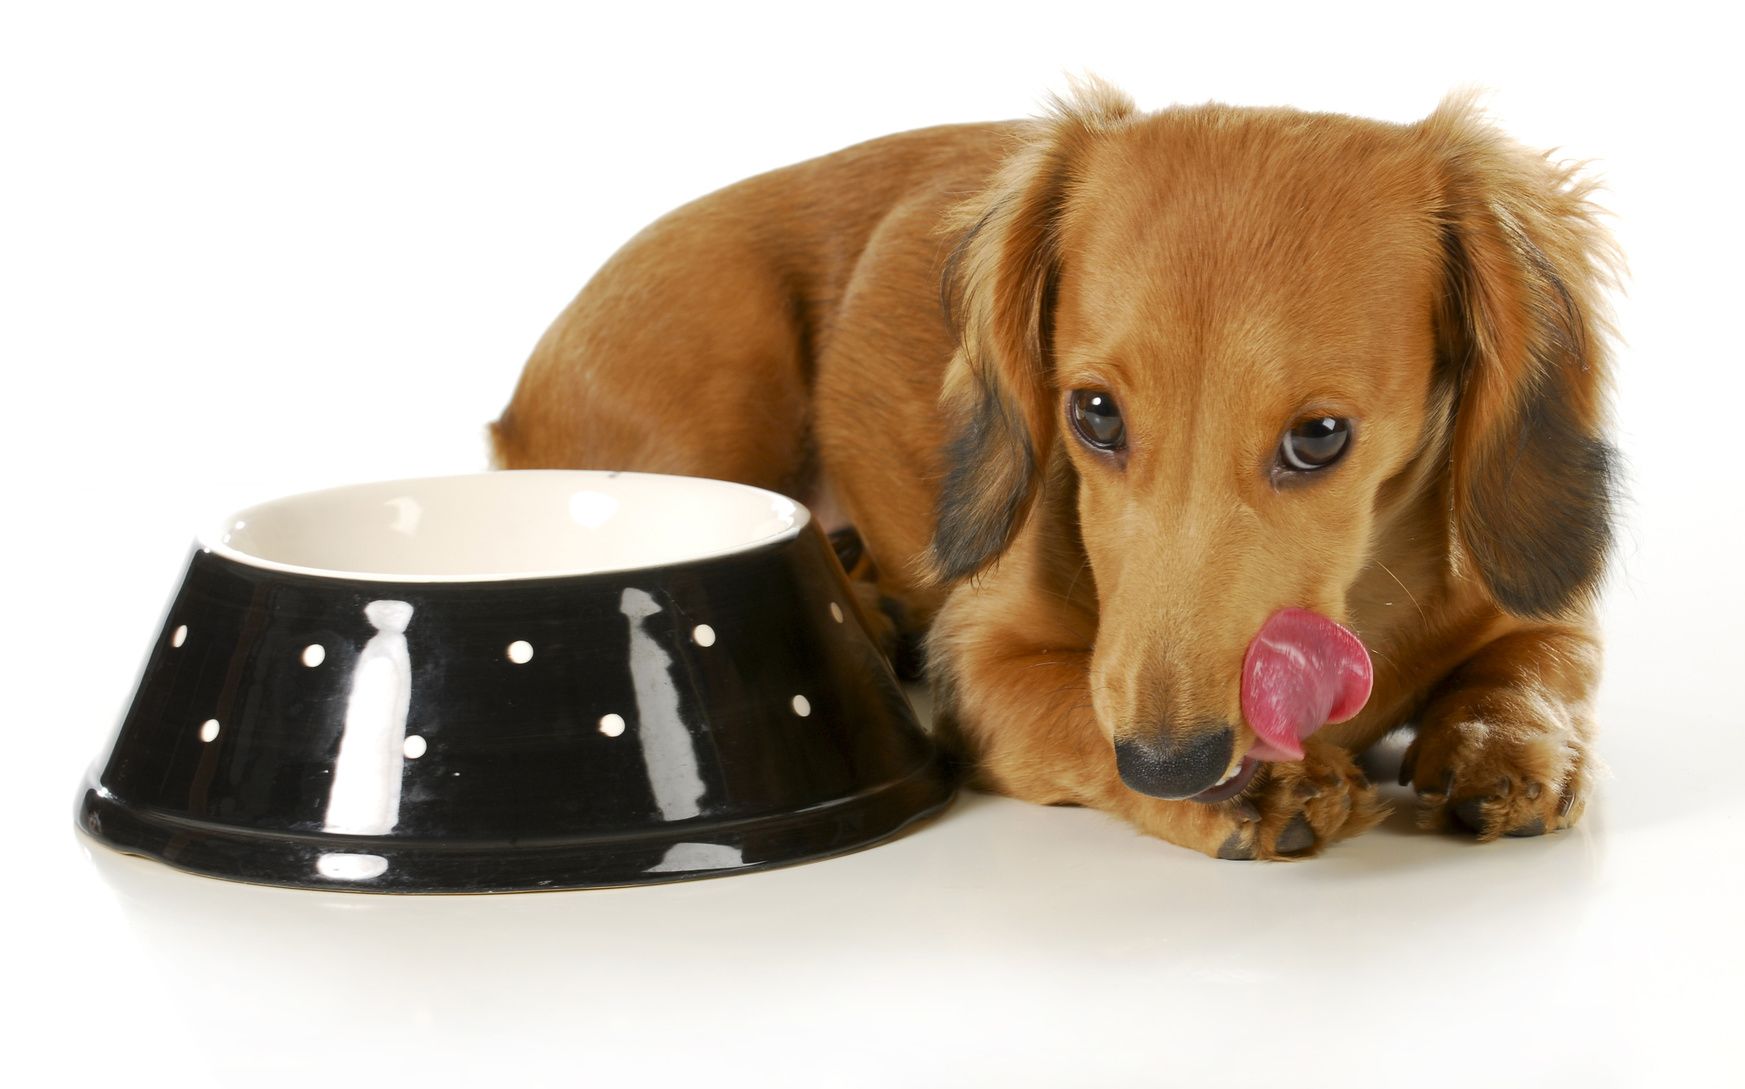 feeding the dog - miniature dachshund licking lips after eating isolated on white background